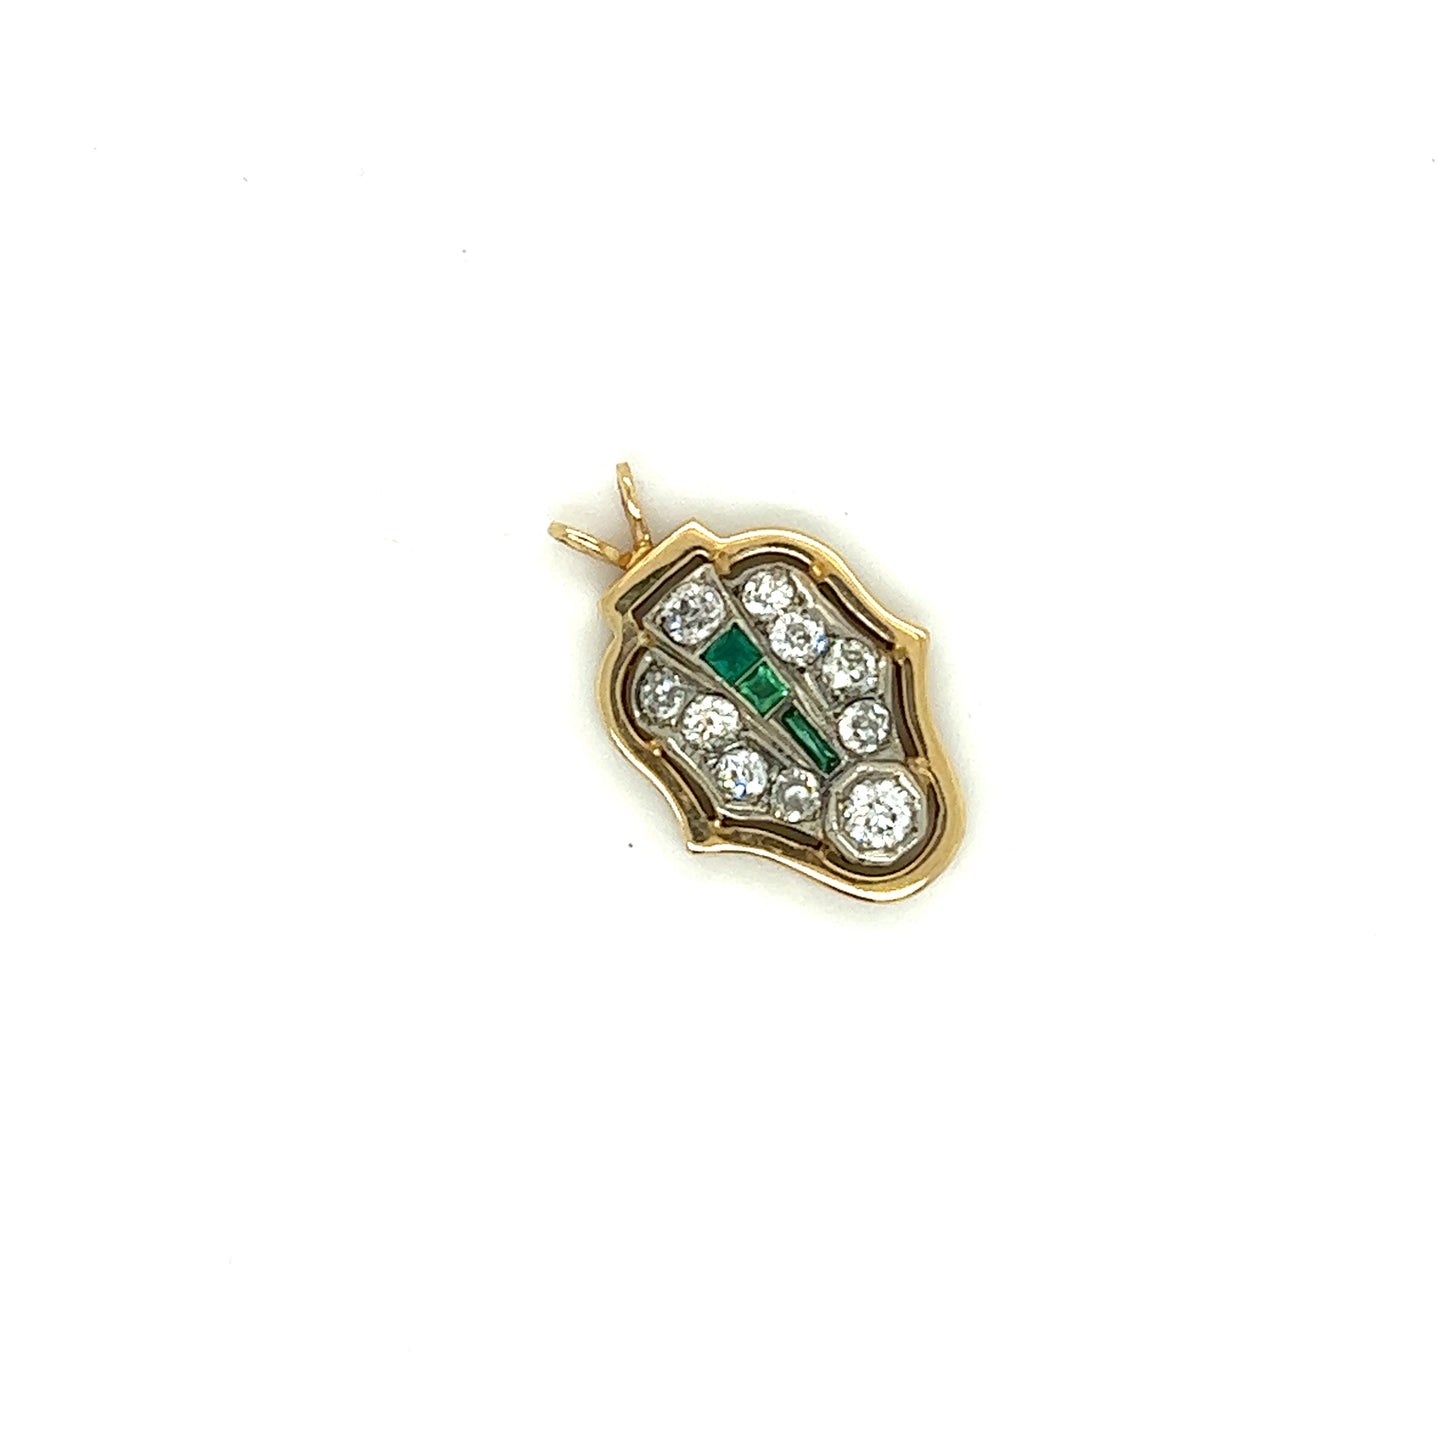 1920s Platinum and Gold Art Deco Diamond and Emerald Pendant